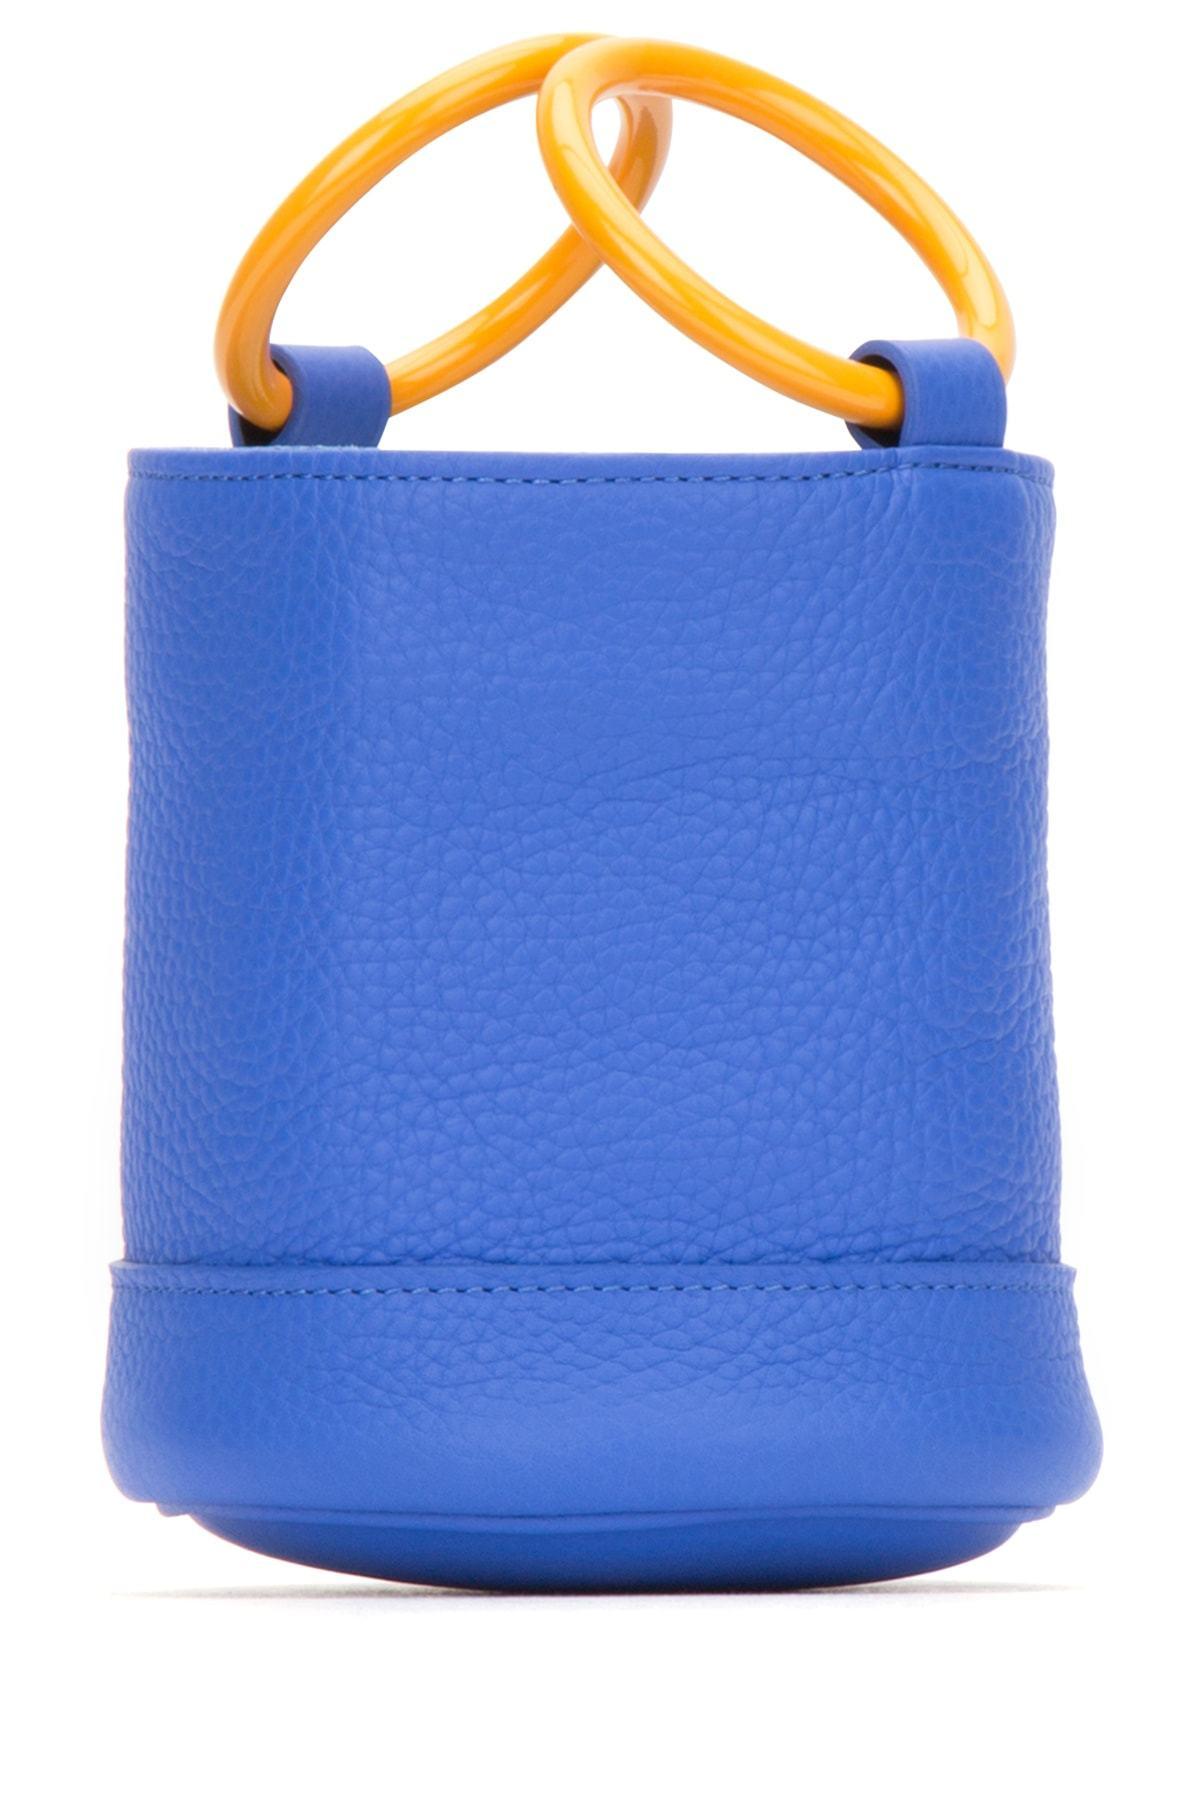 Simon Miller Leather Small Bonsai Bucket Bag in Blue - Lyst